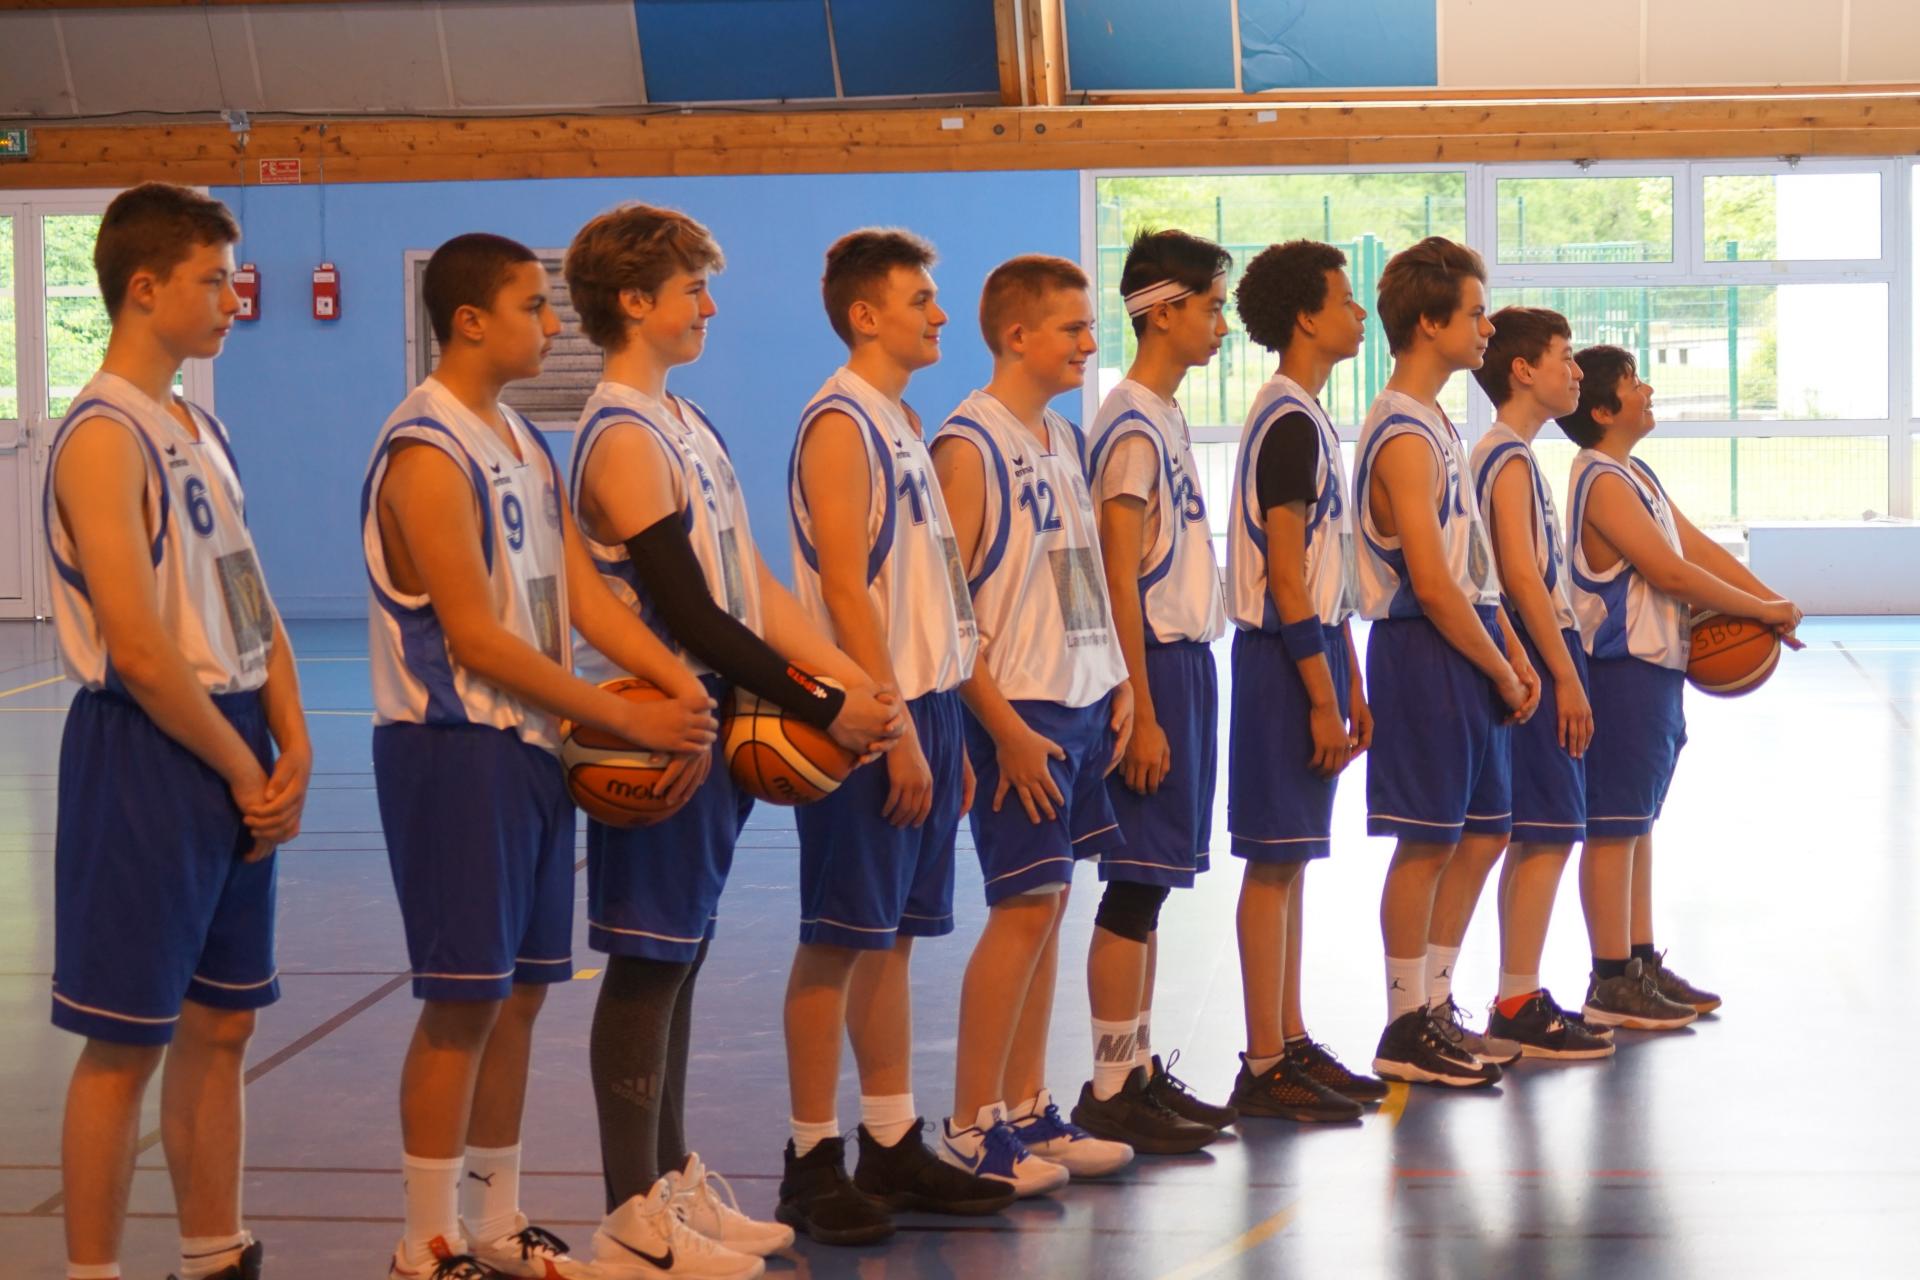 U15M Sud Basket Oise Saison 2018-2019